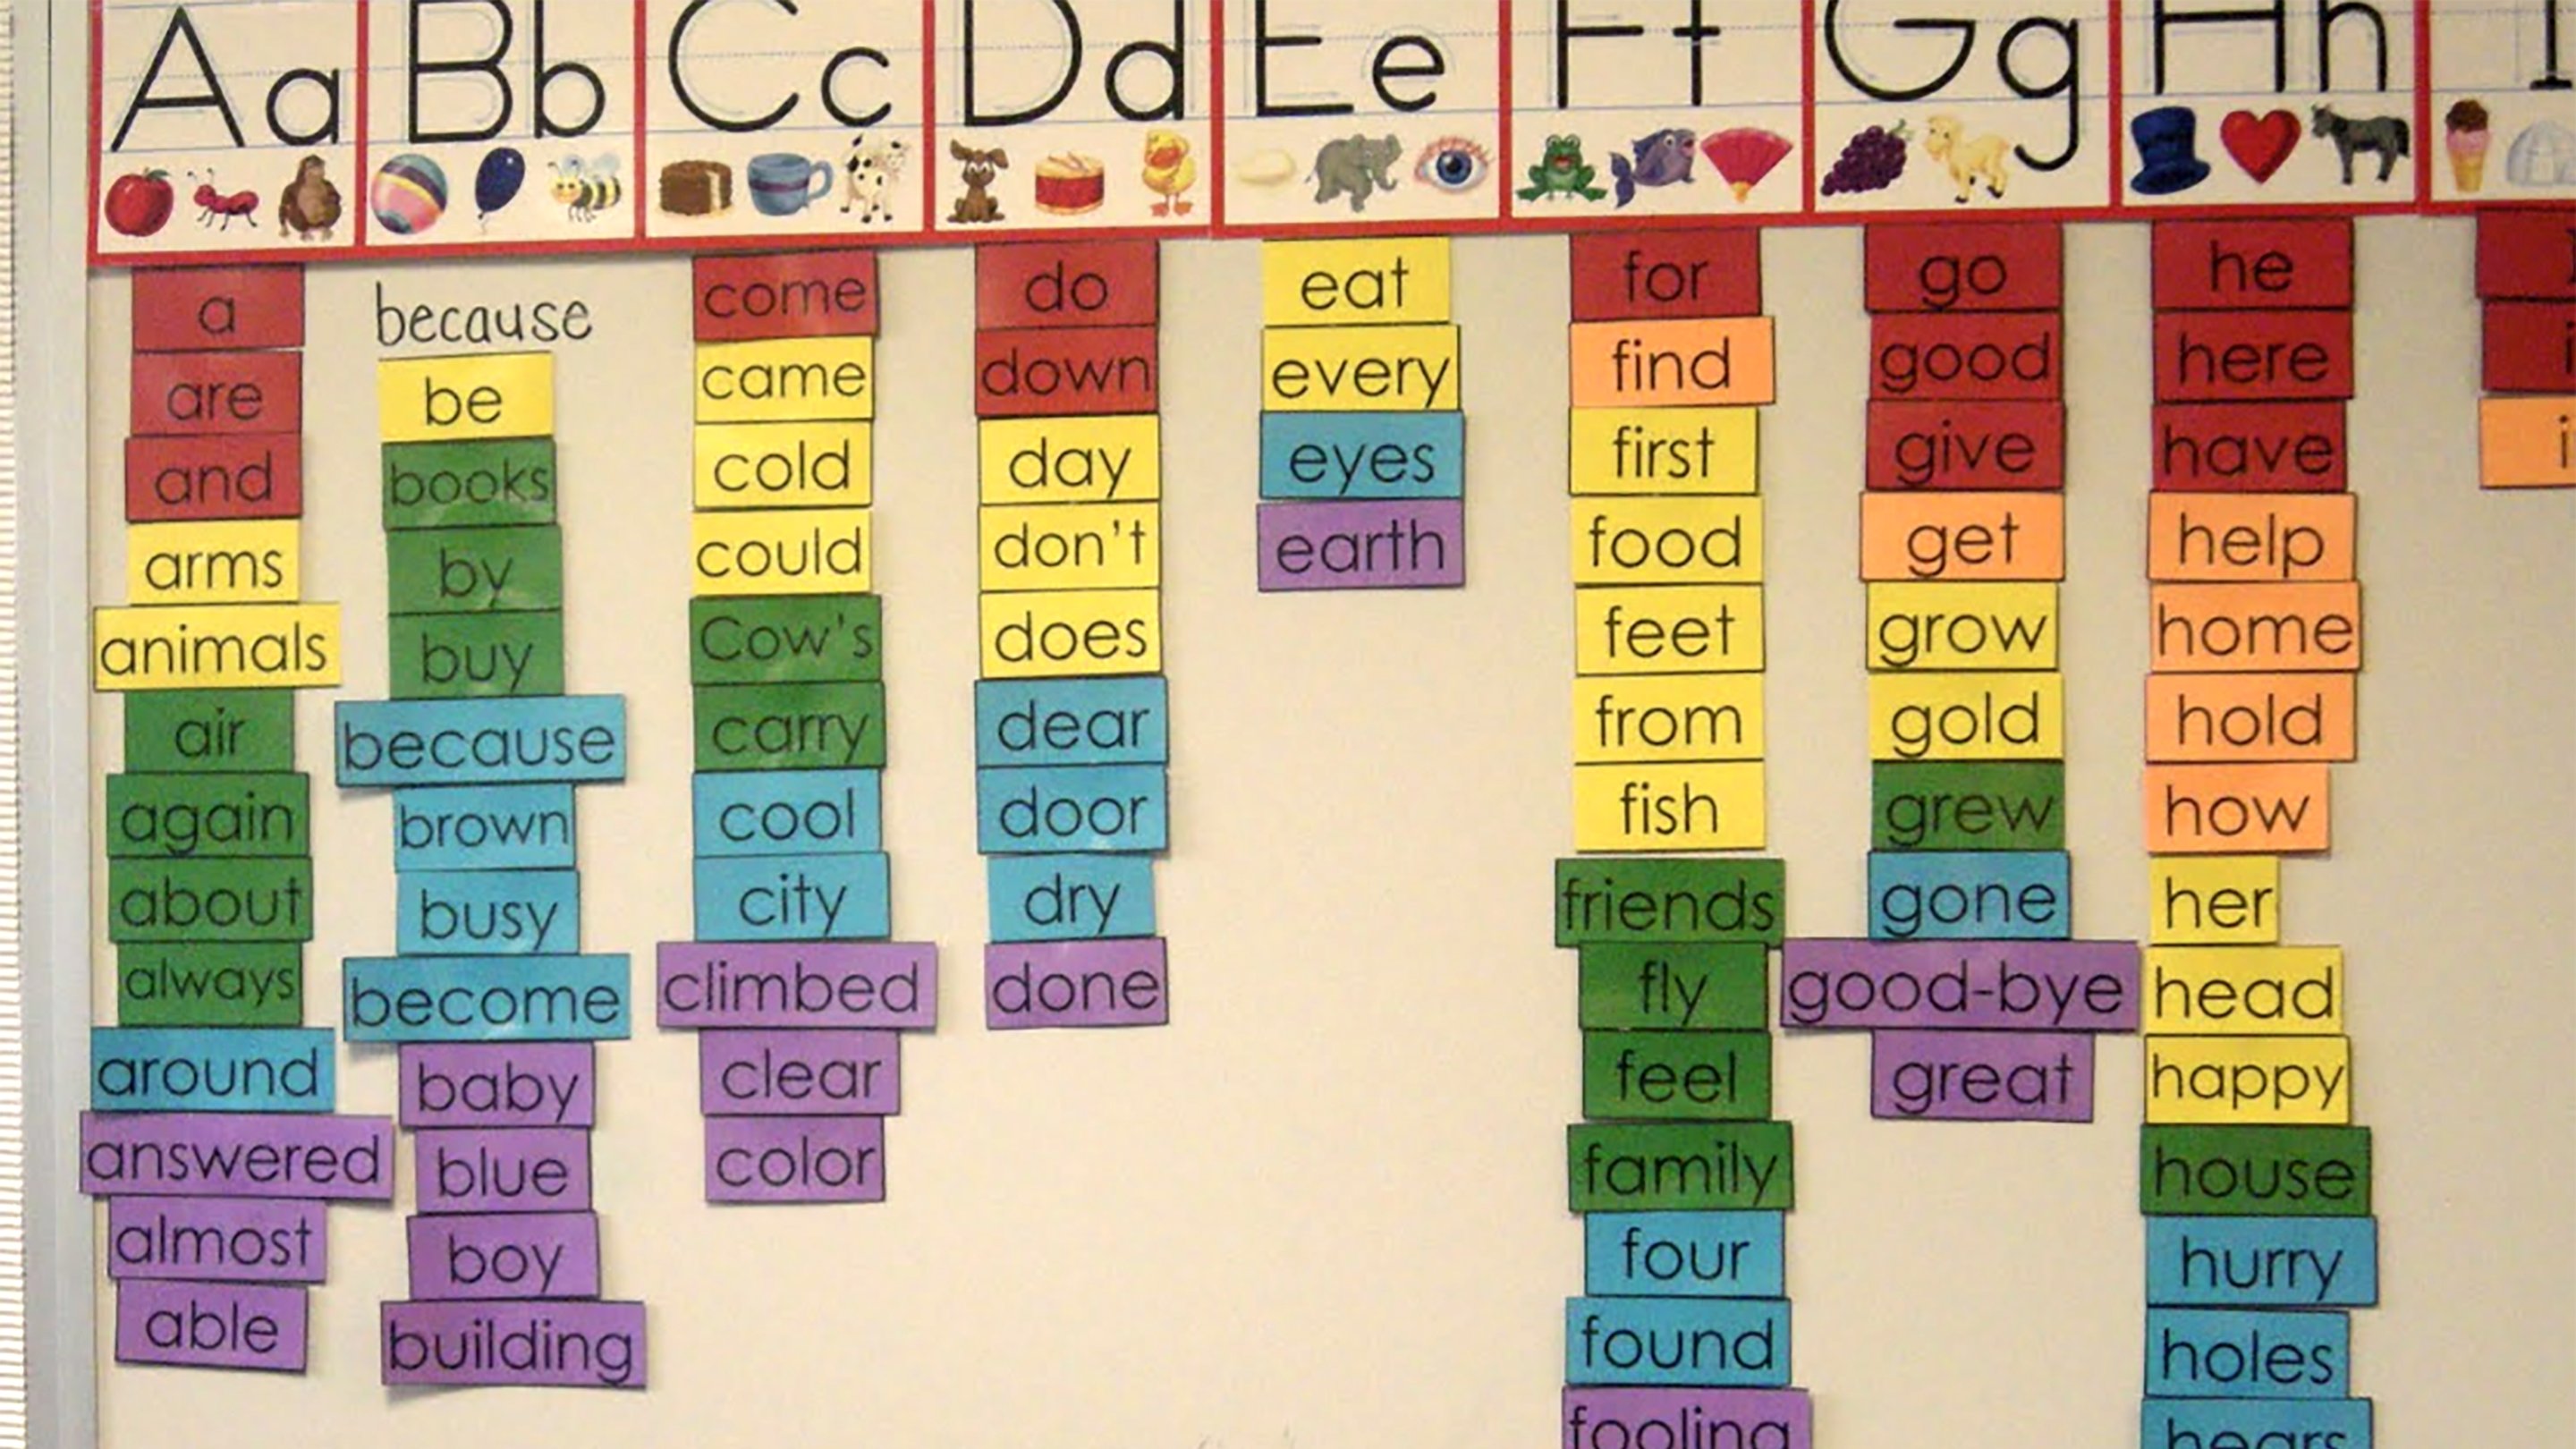 First Grade Word Wall (professor feito) - Twinkl